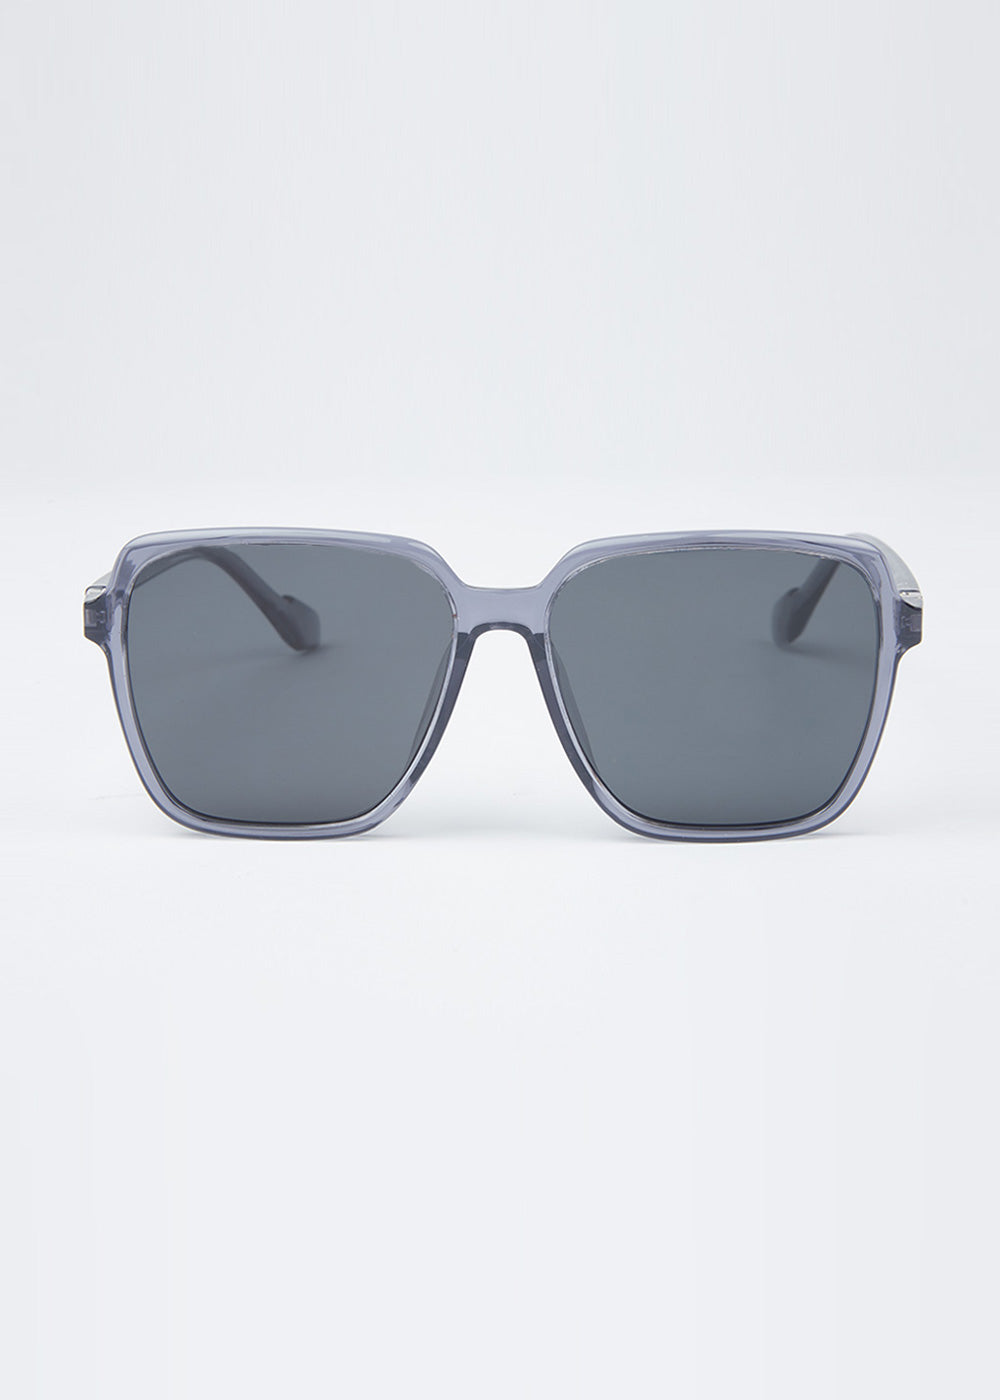 CrystalFrost Unisex Square Sunglasses